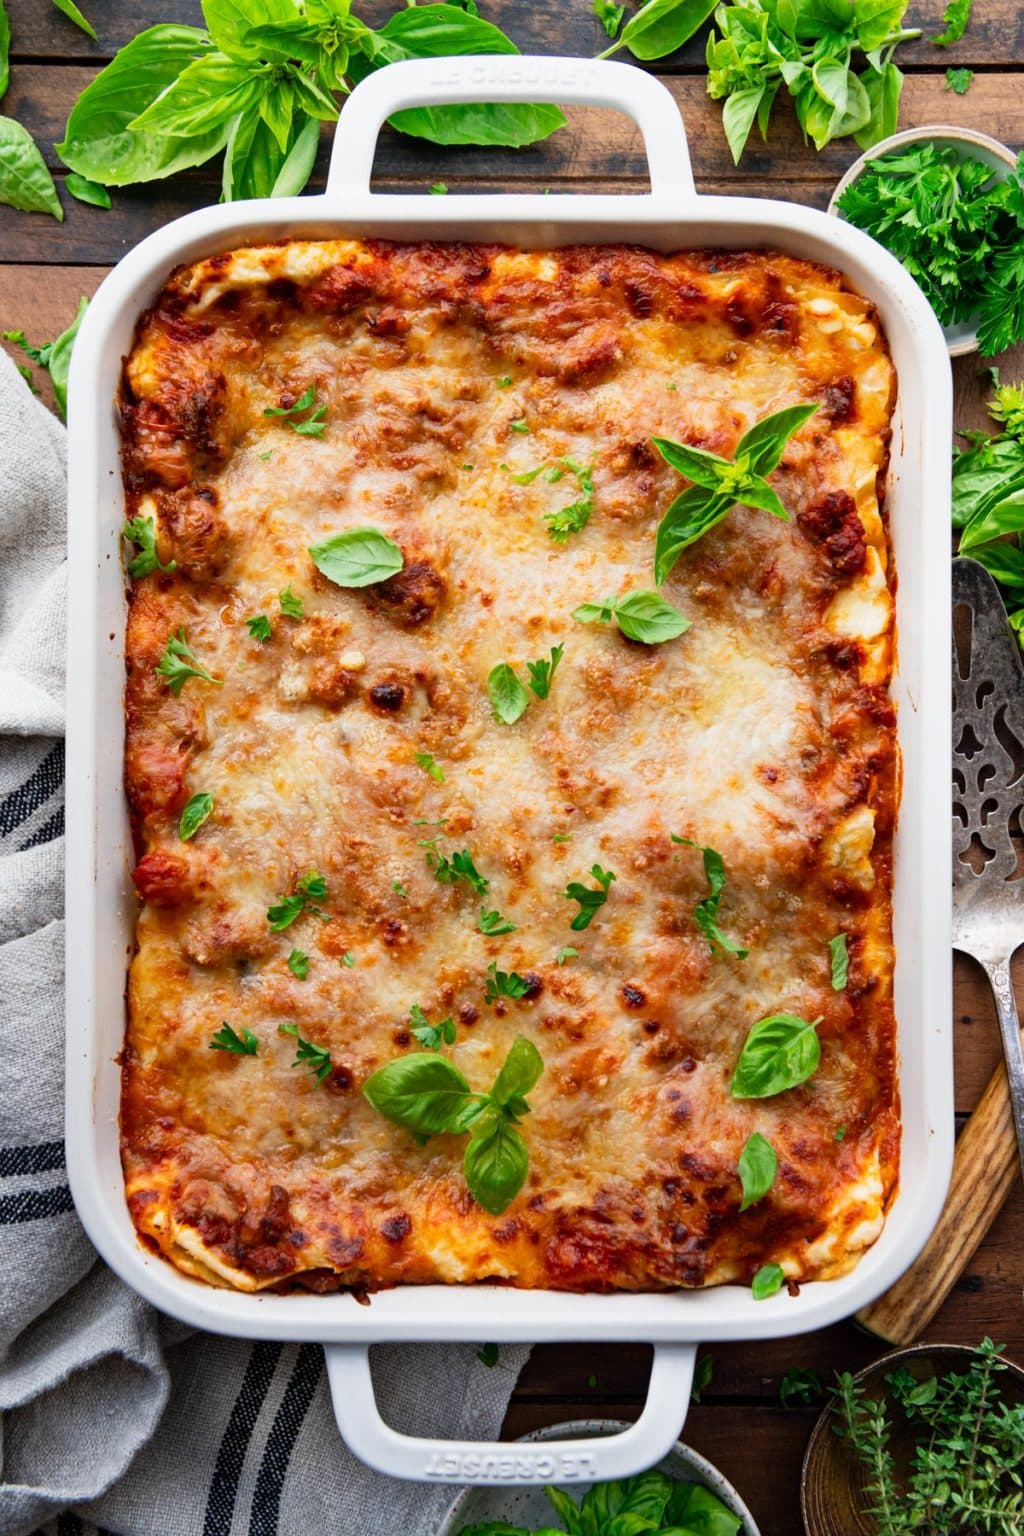 Chi-Chi's Classic Lasagna Recipe - The Seasoned Mom